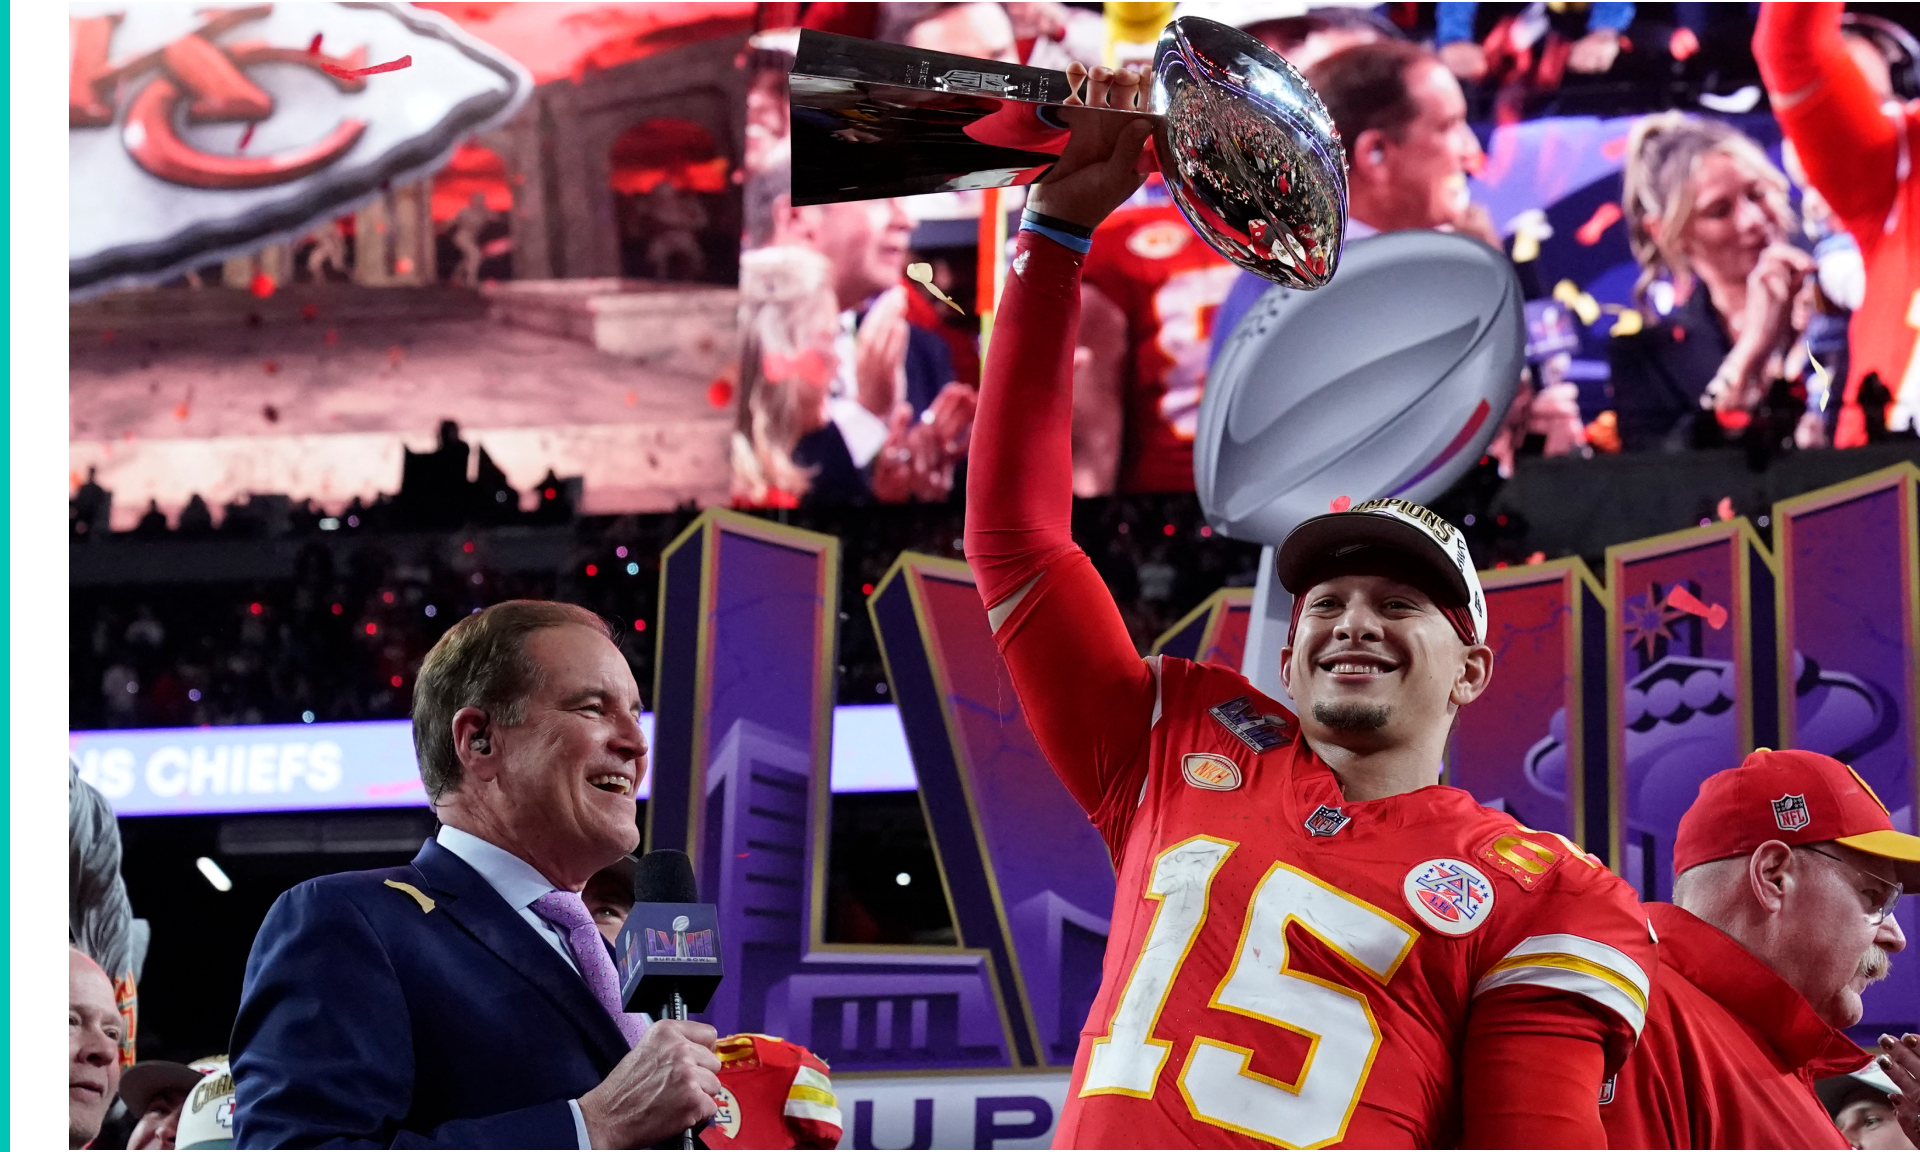 Kansas City Chiefs' quarterback #15 Patrick Mahomes celebrates with the trophy after the Chiefs won Super Bowl LVIII